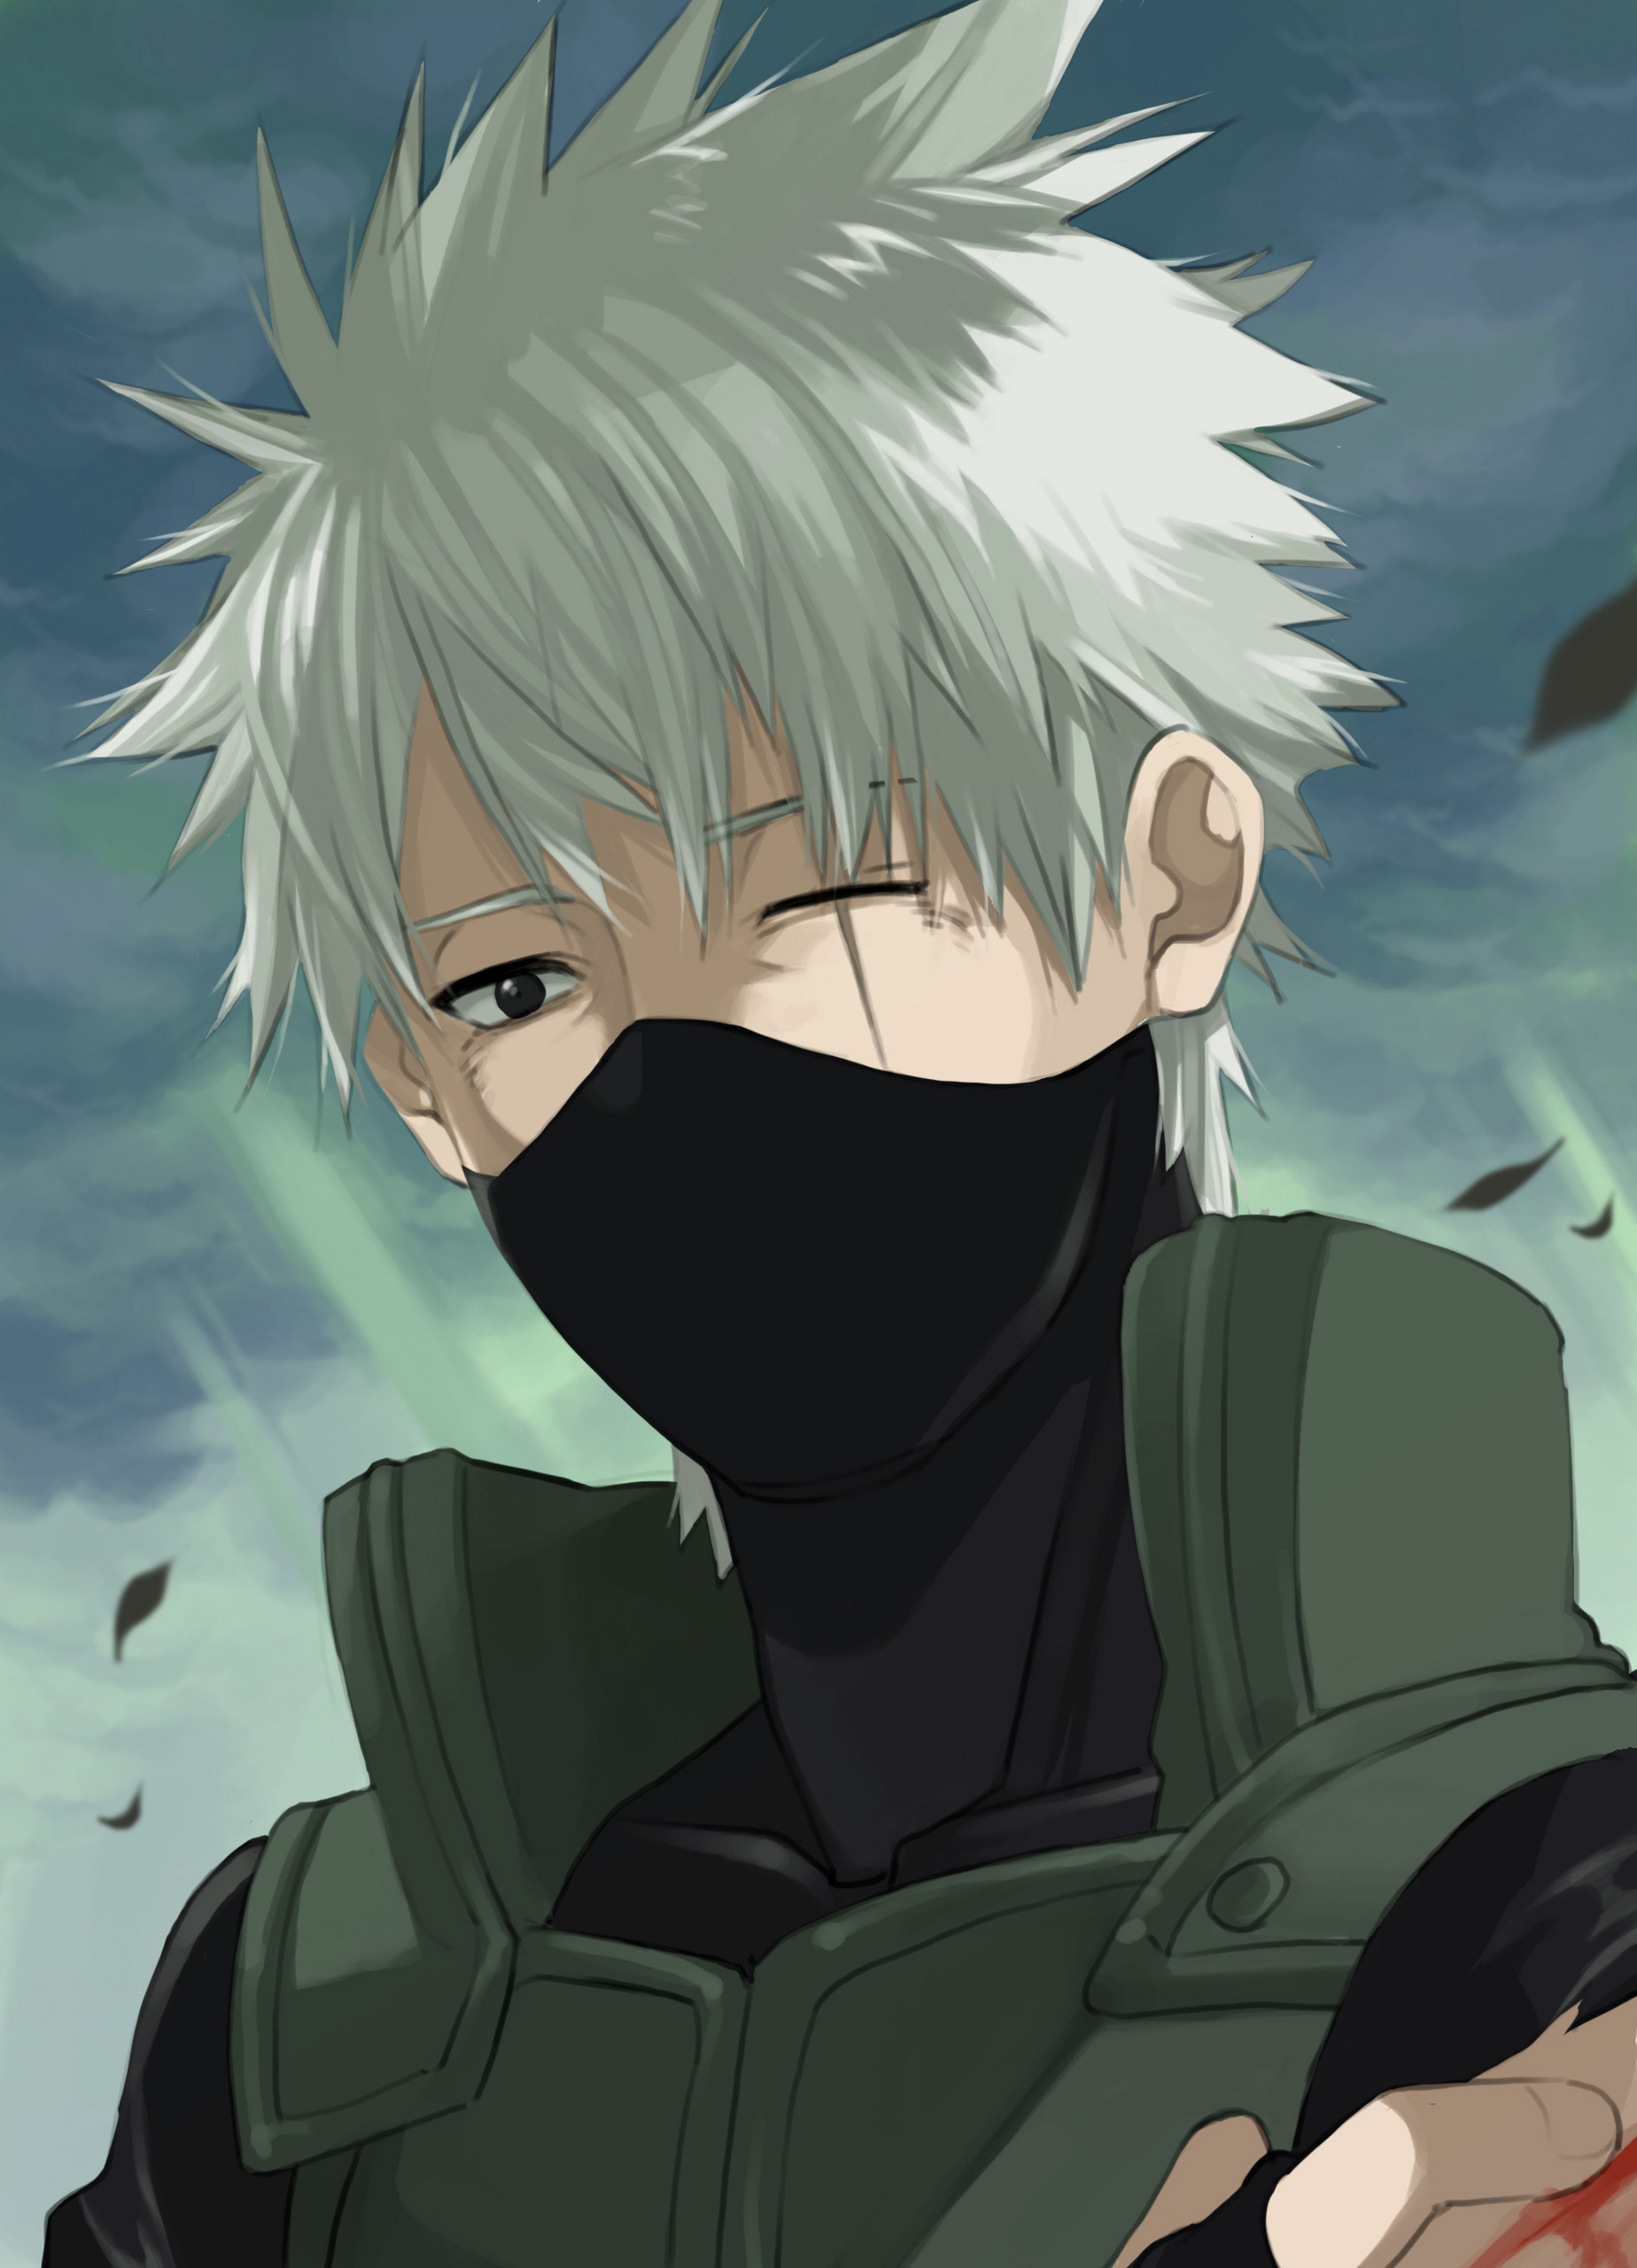 Hình ảnh Kakashi ngầu nhất  Ninja sao chép thần thái  Kakashi Kakashi  hatake Anime